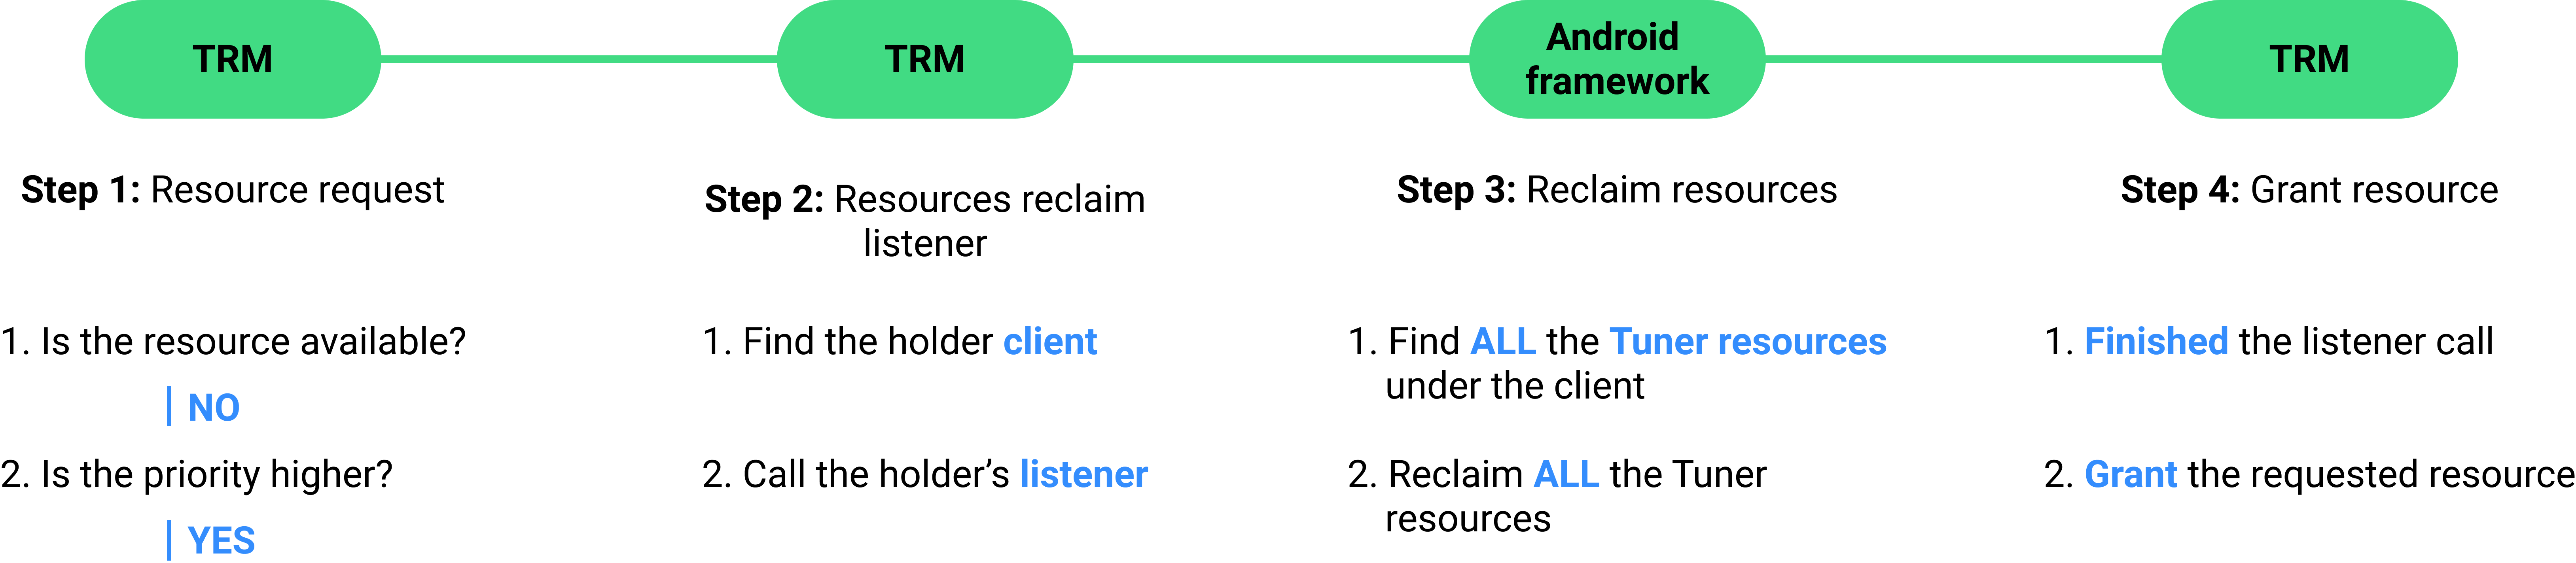 Diagramm des Prozesses des Rückforderungsmechanismus.